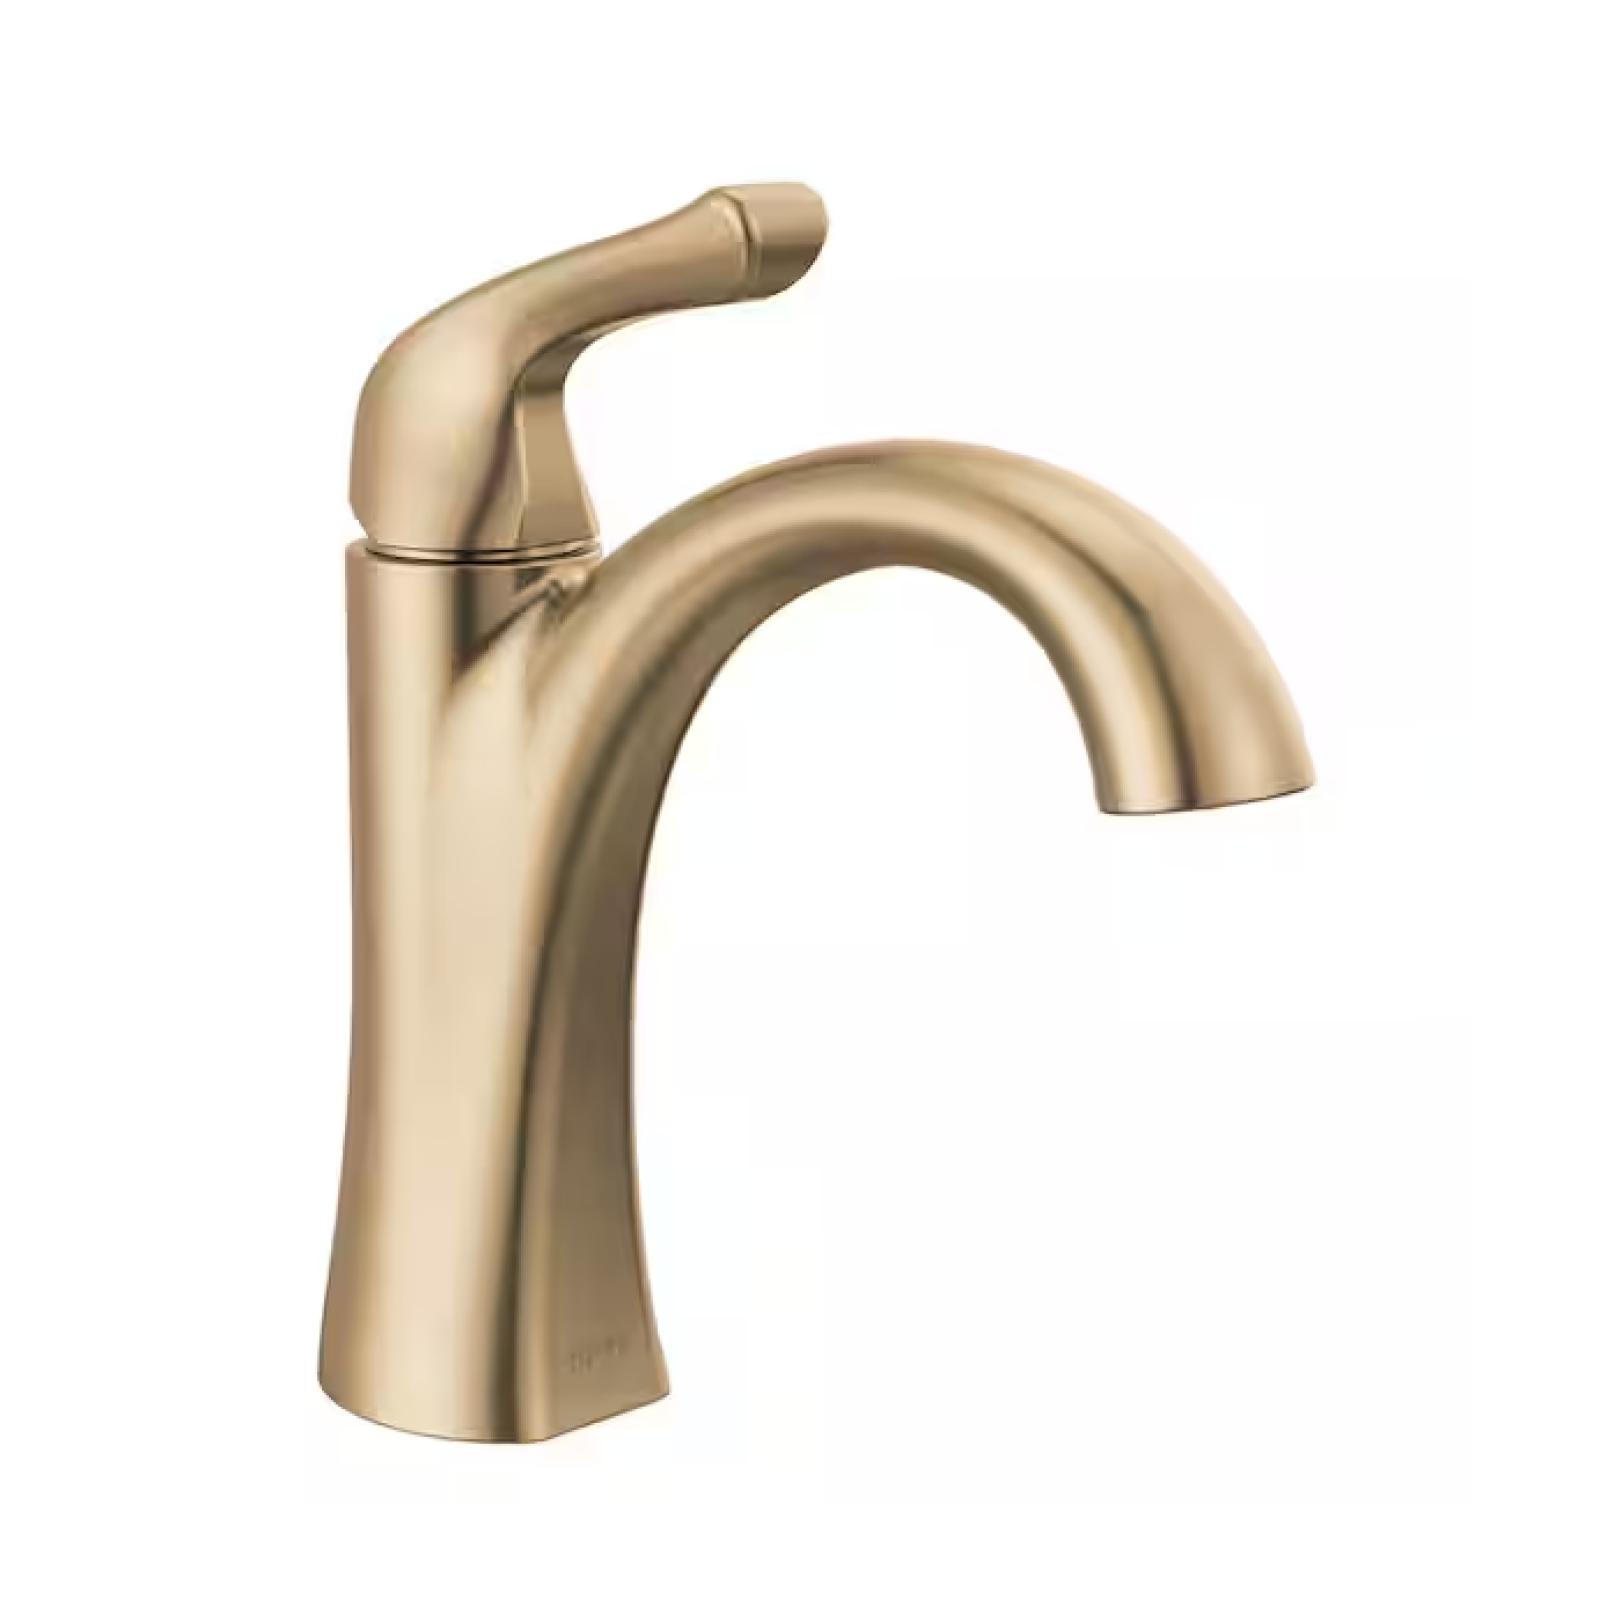 NEW! - Delta Arvo Single Hole Single-Handle Bathroom Faucet in Champagne Bronze